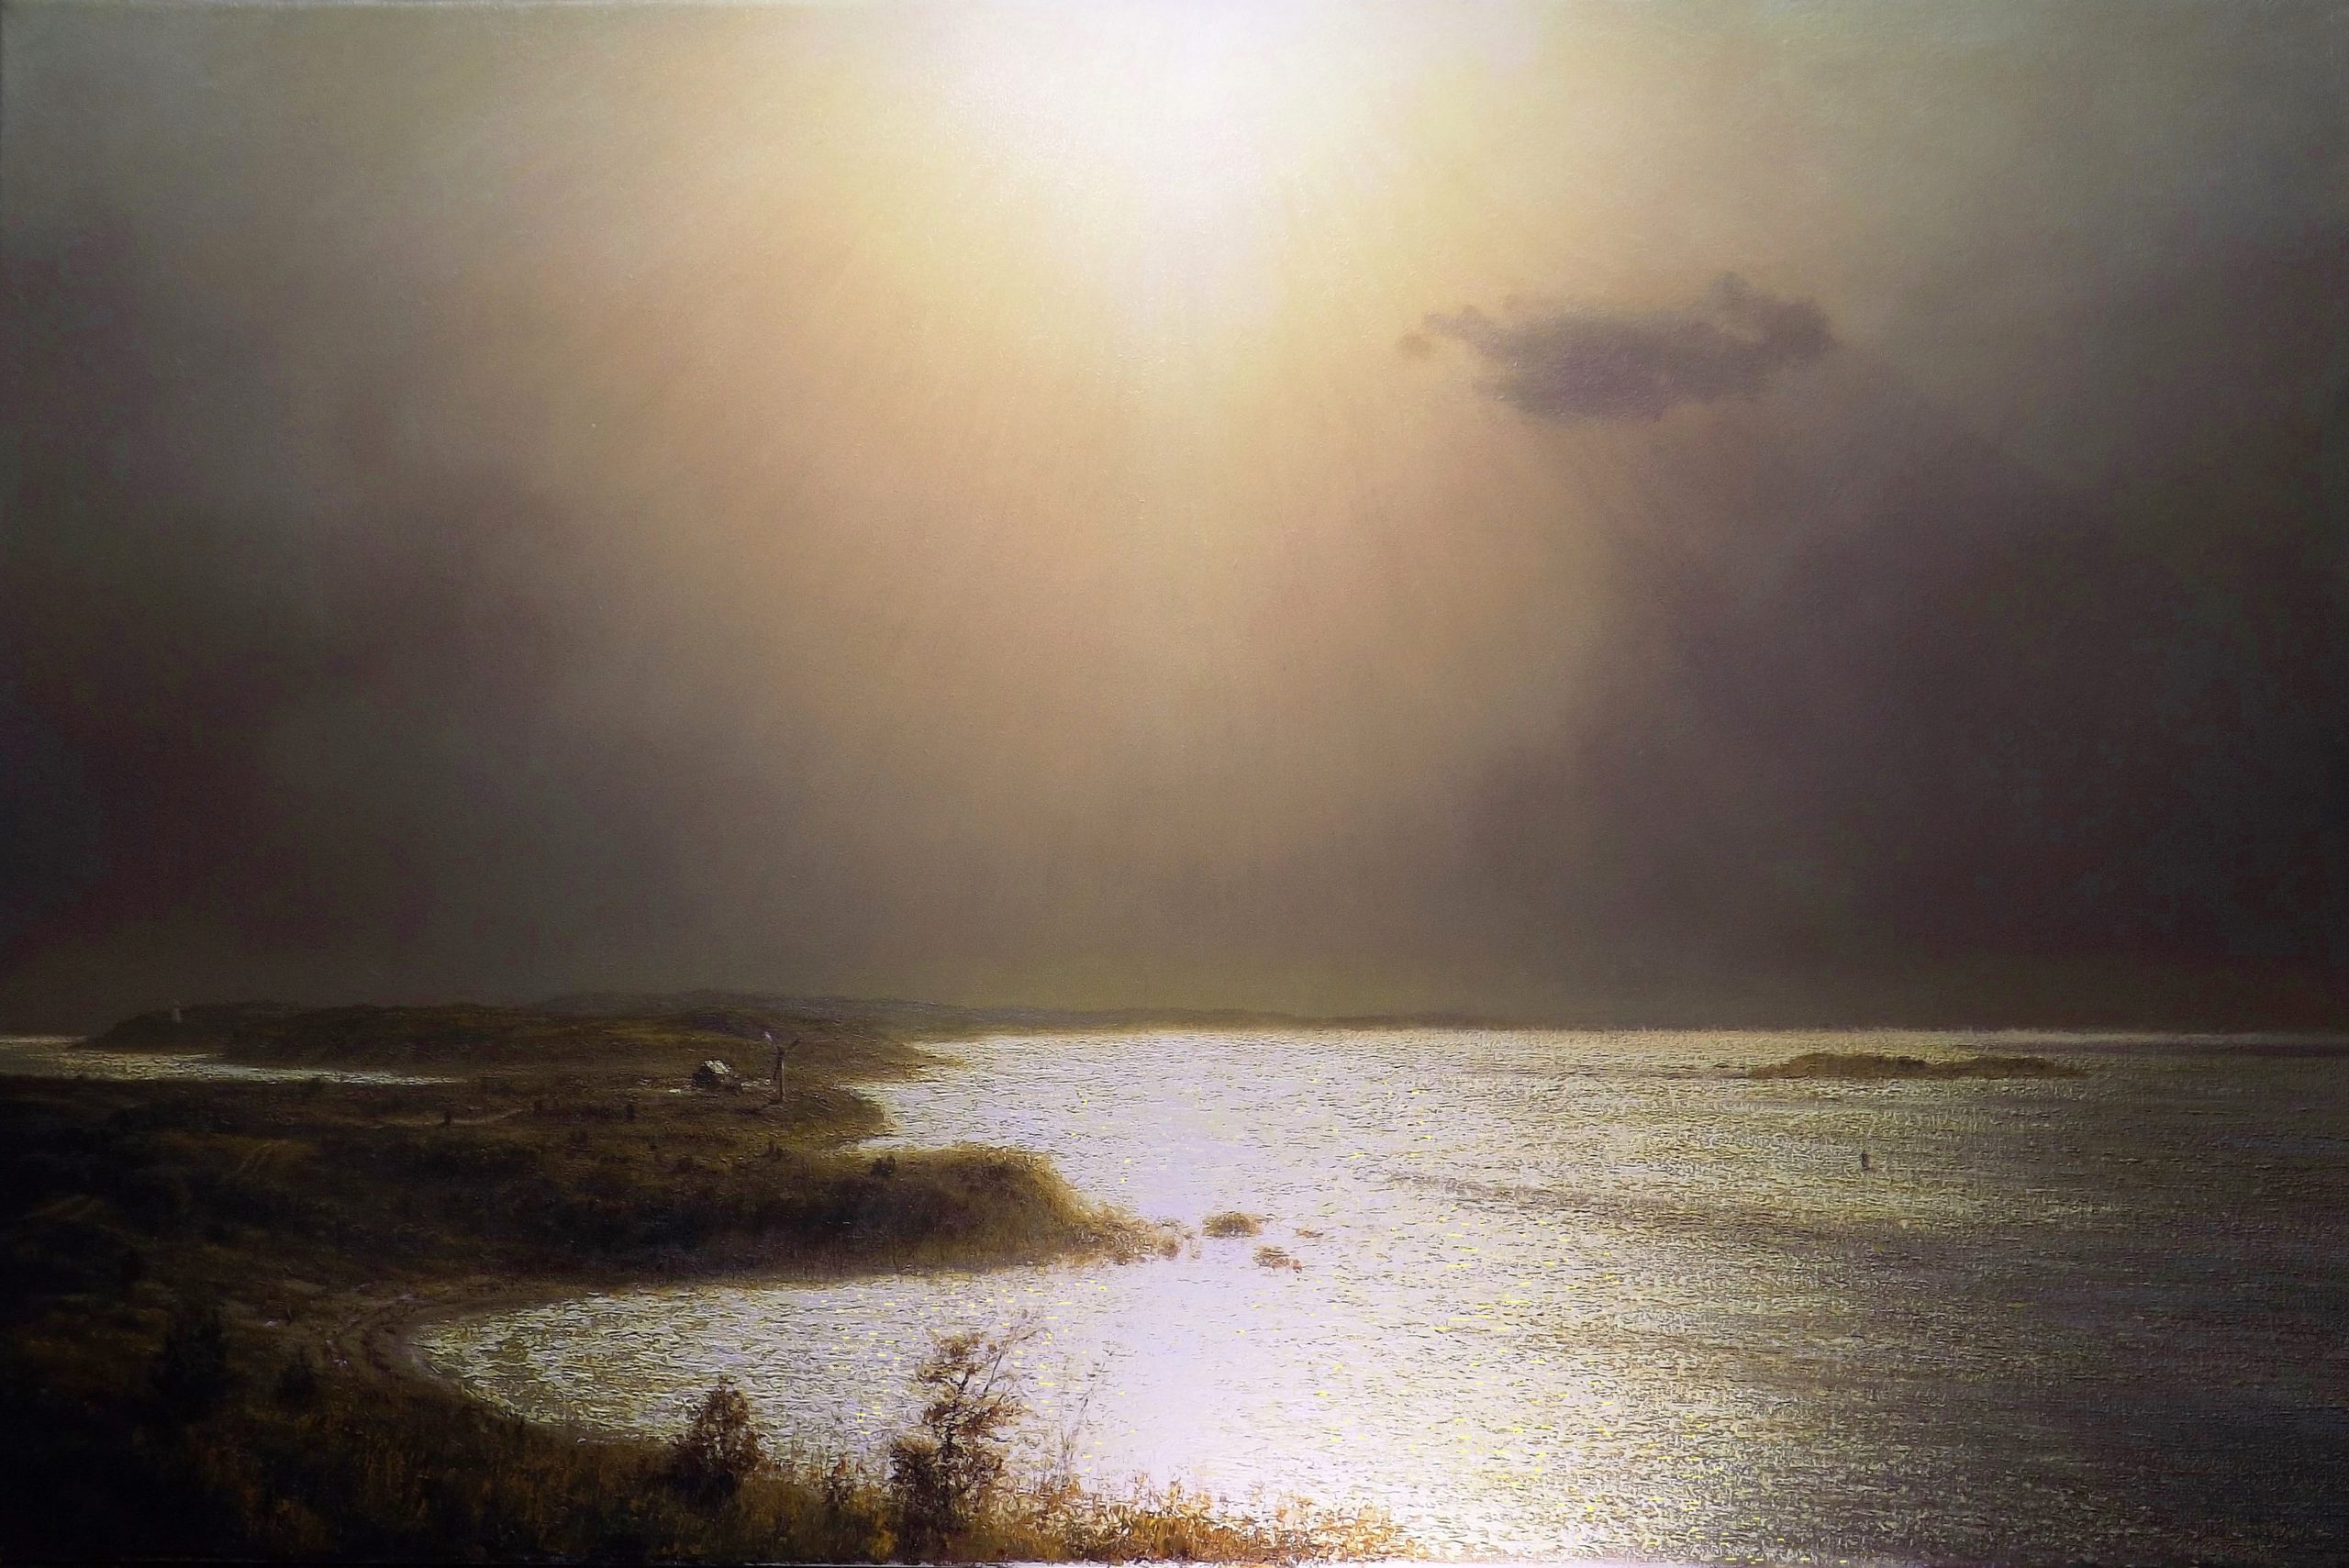 Joseph McGurl, "Lightspeed, Earthbound," 12 x 36 inches, Oil on canvas